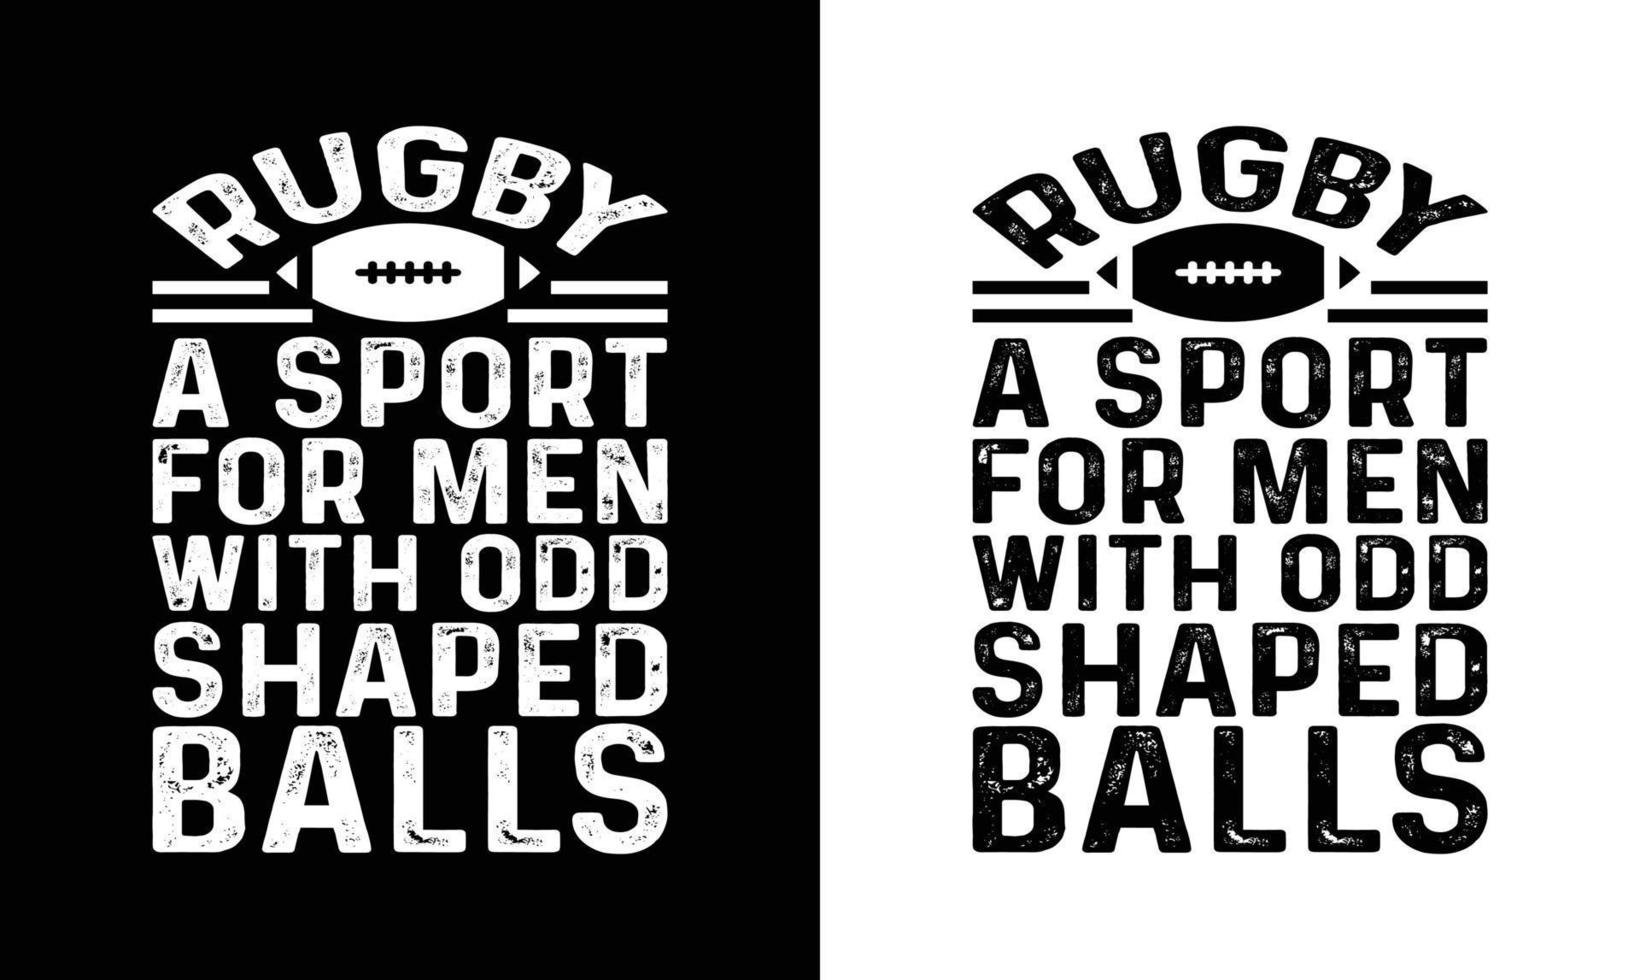 amerikan fotboll t skjorta design, rugby t skjorta design vektor